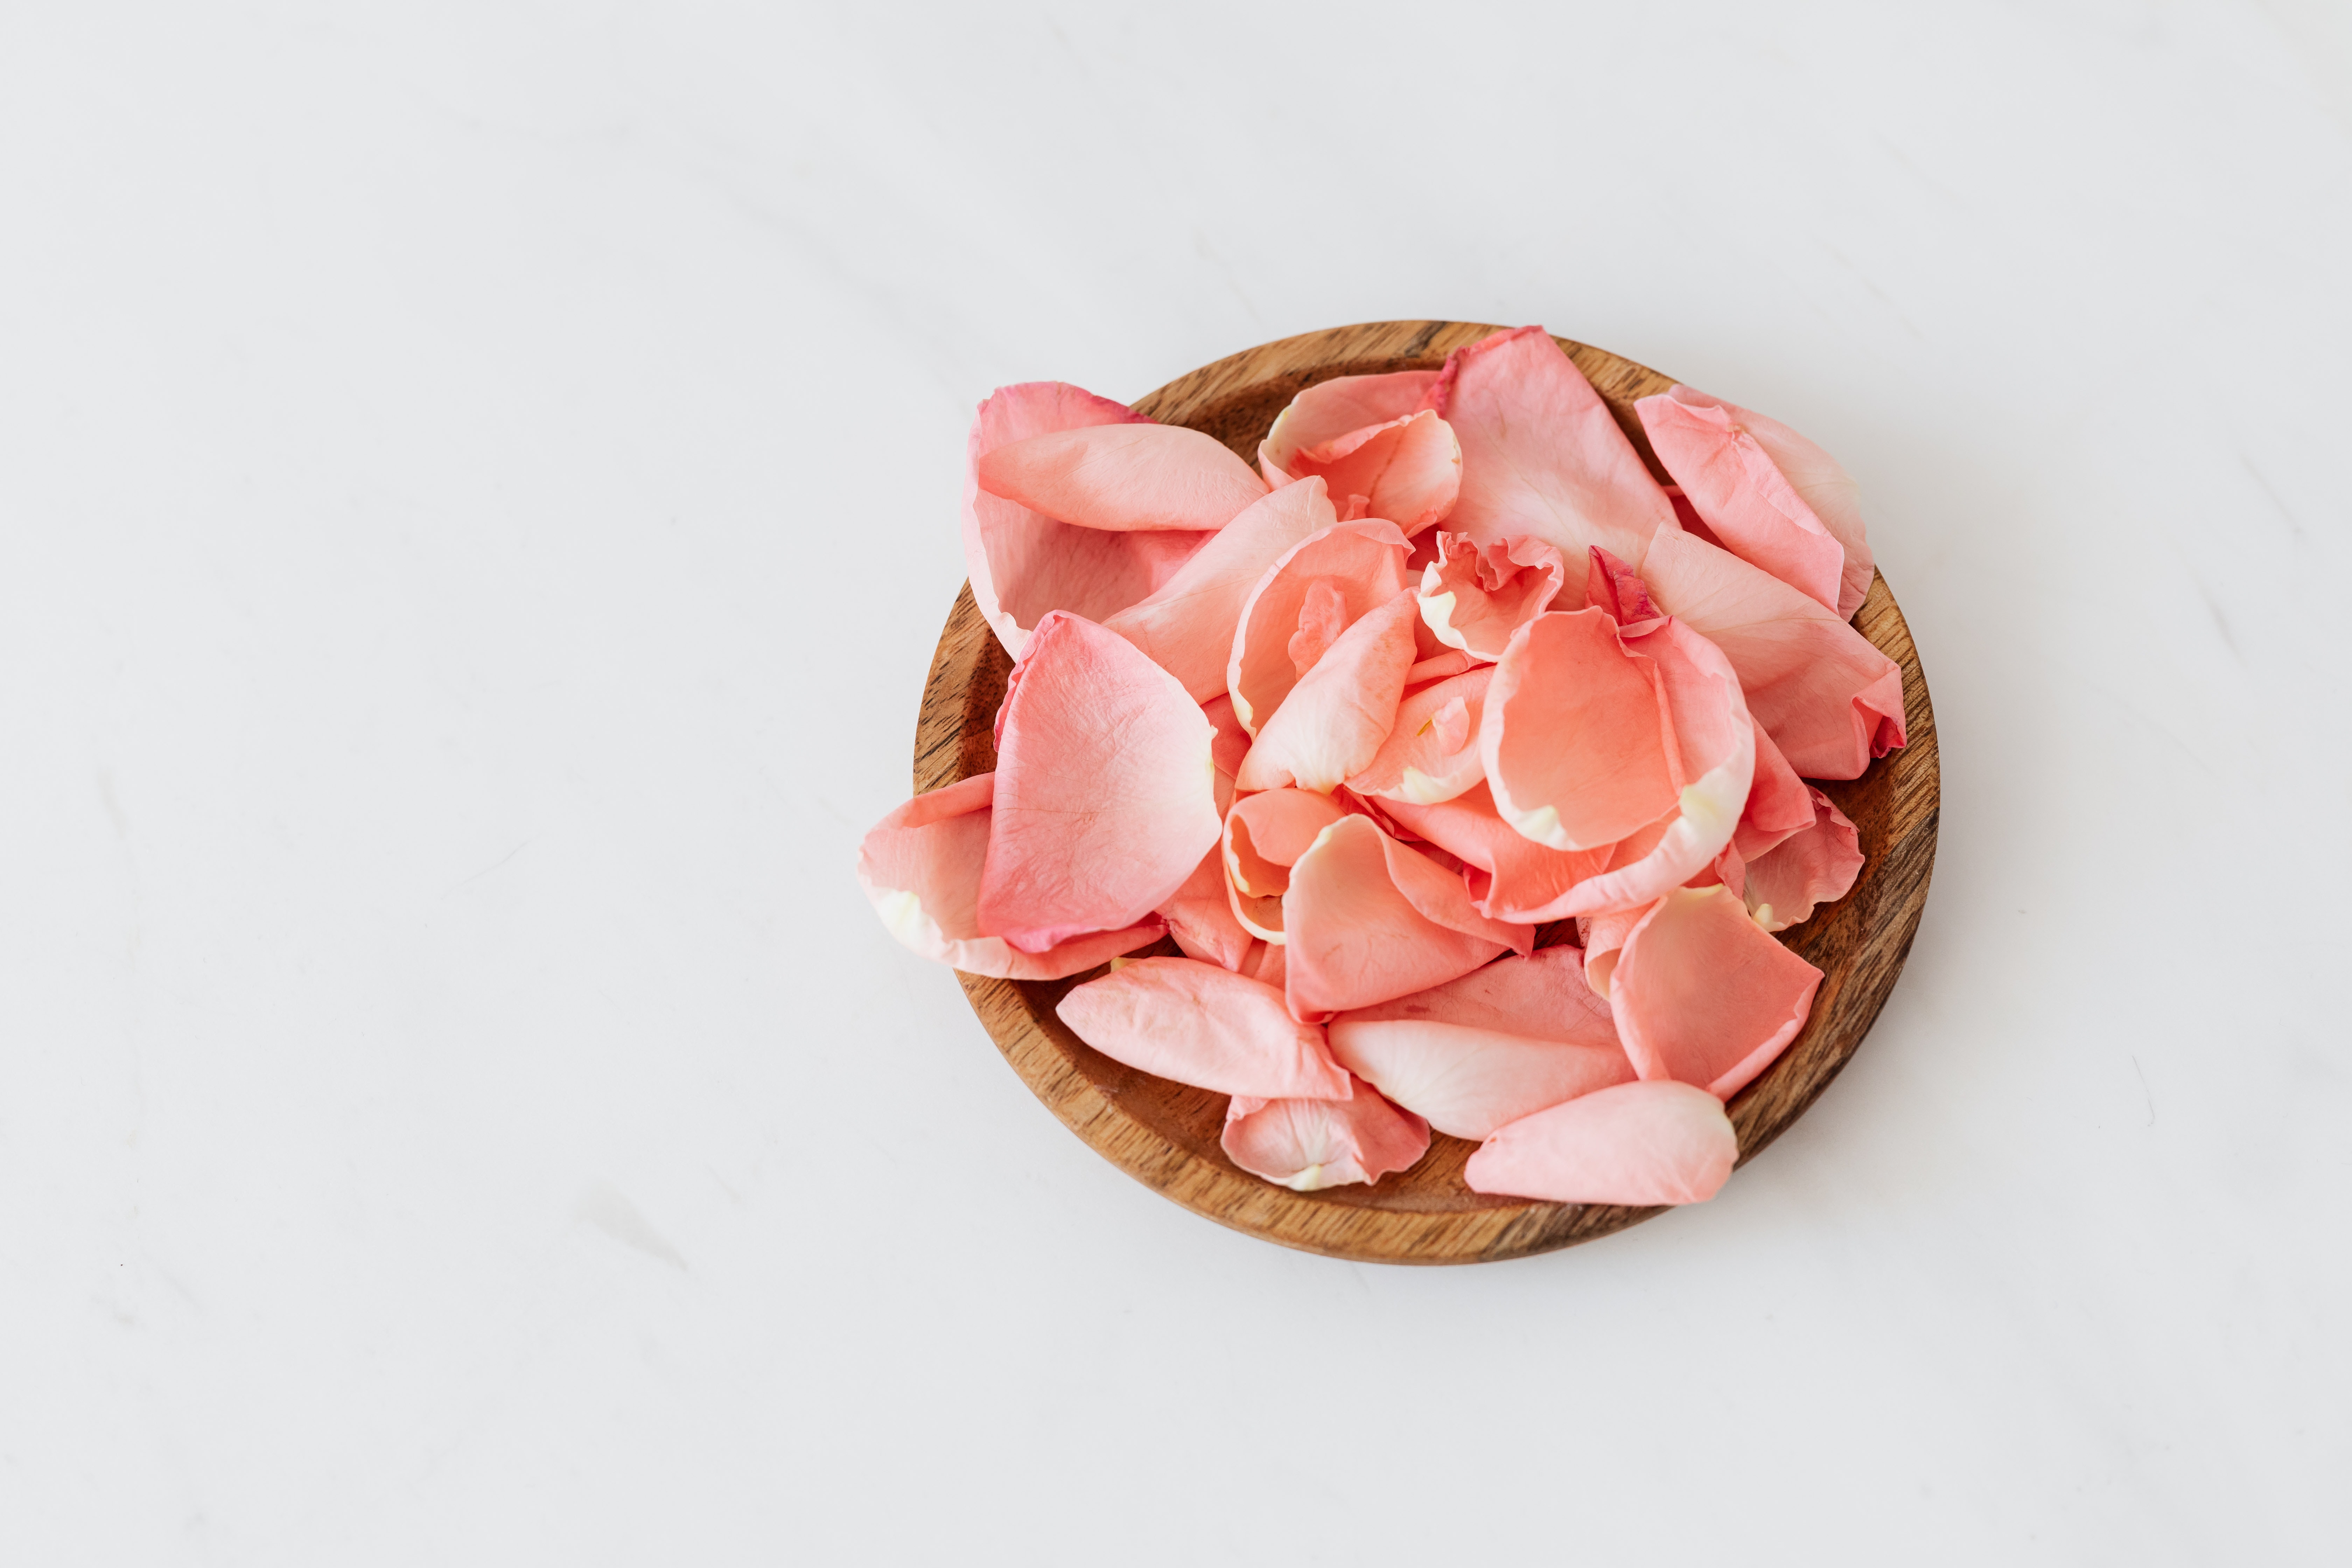 bowl of pink flower petals